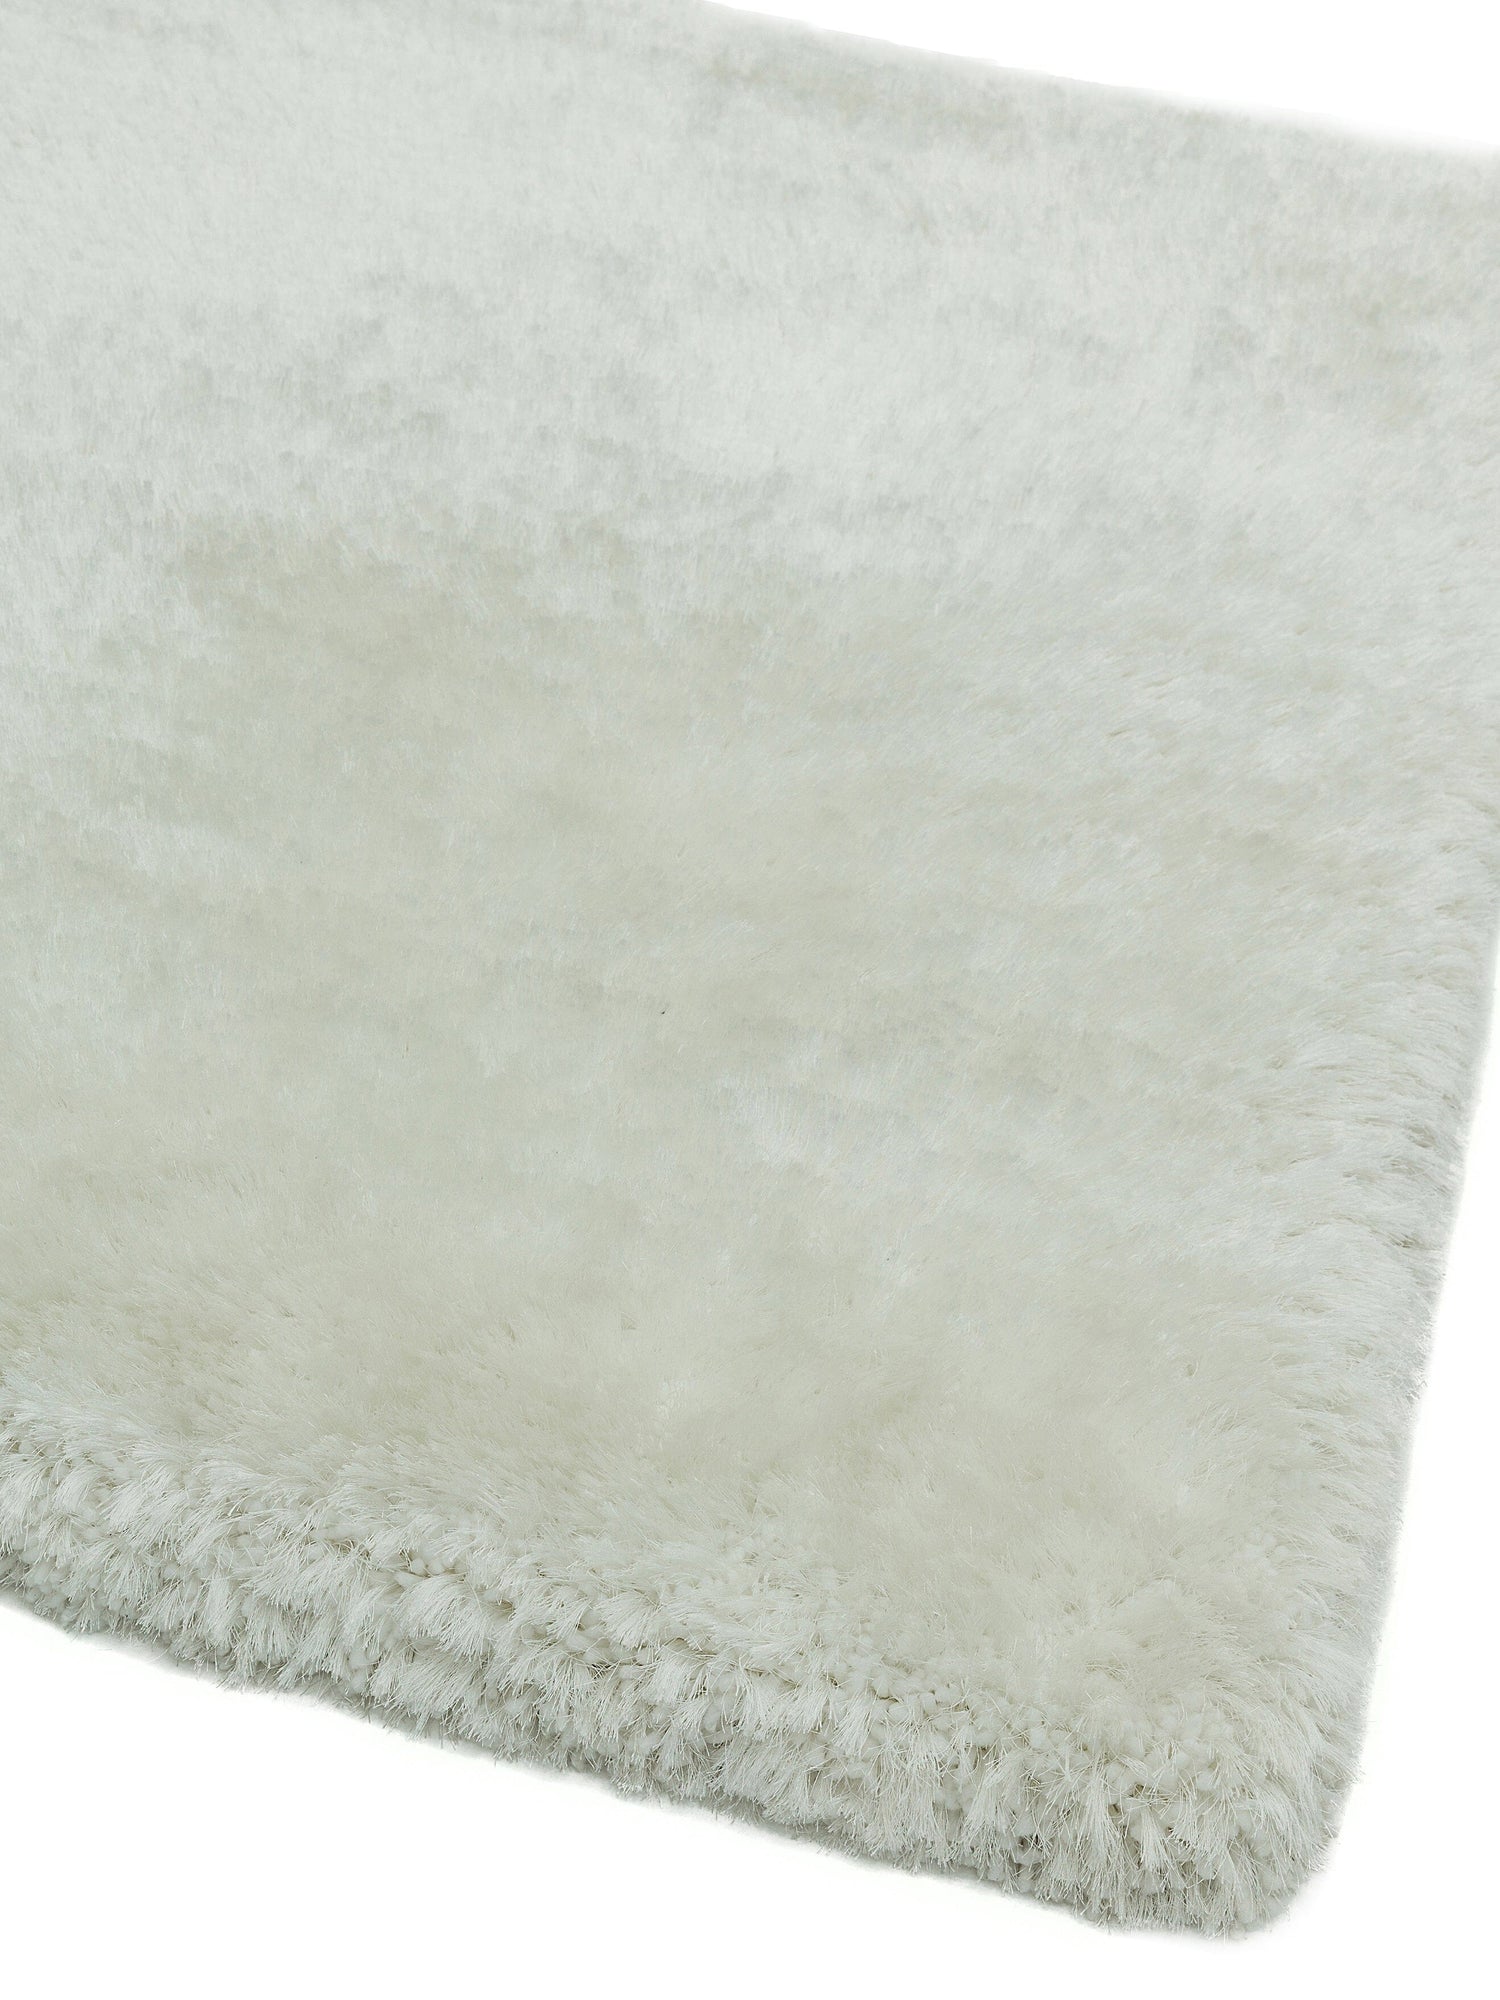  Asiatic Carpets-Asiatic Carpets Plush Hand Woven Rug White - 140 x 200cm-Cream, White 317 